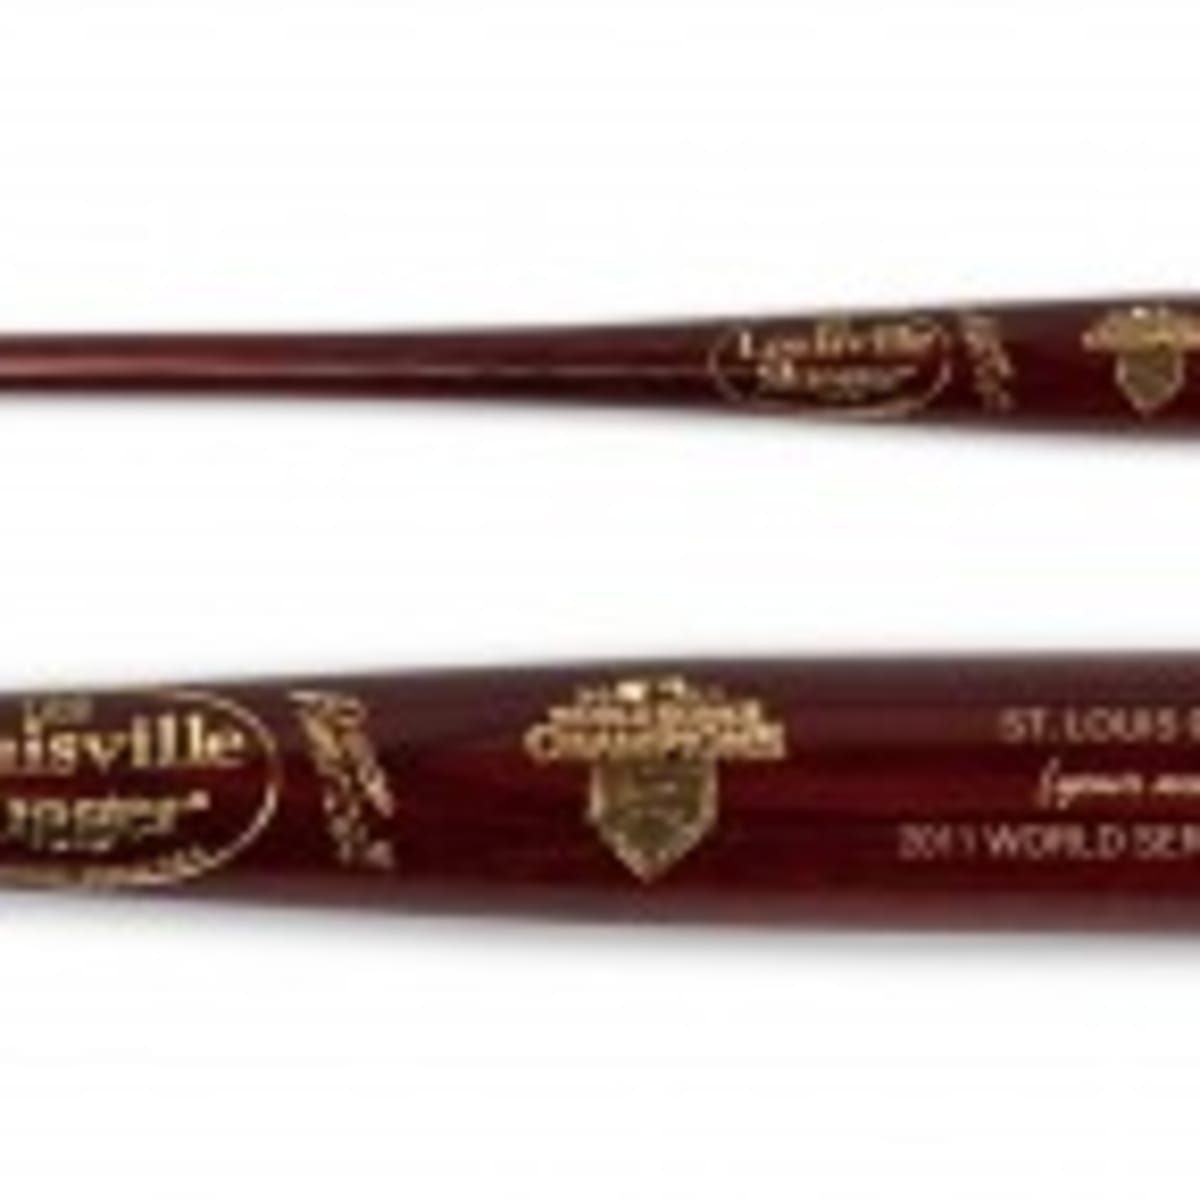 Louisville Slugger makes 2021 World Series commemorative bats